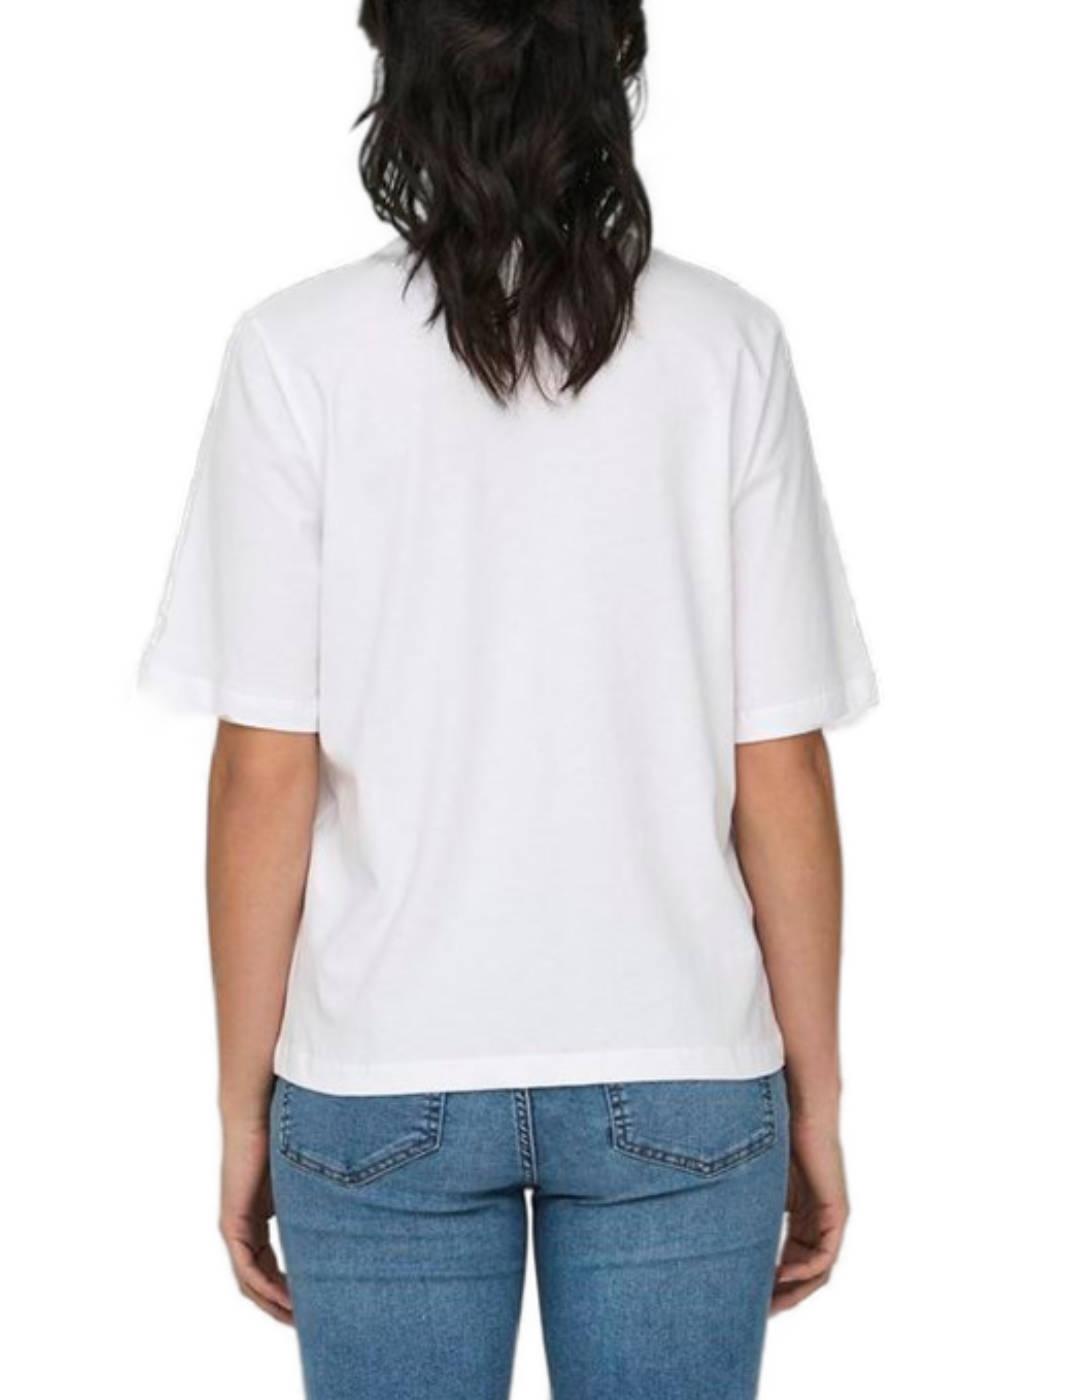 Camiseta Only Dorte blanca animal manga corta para mujer